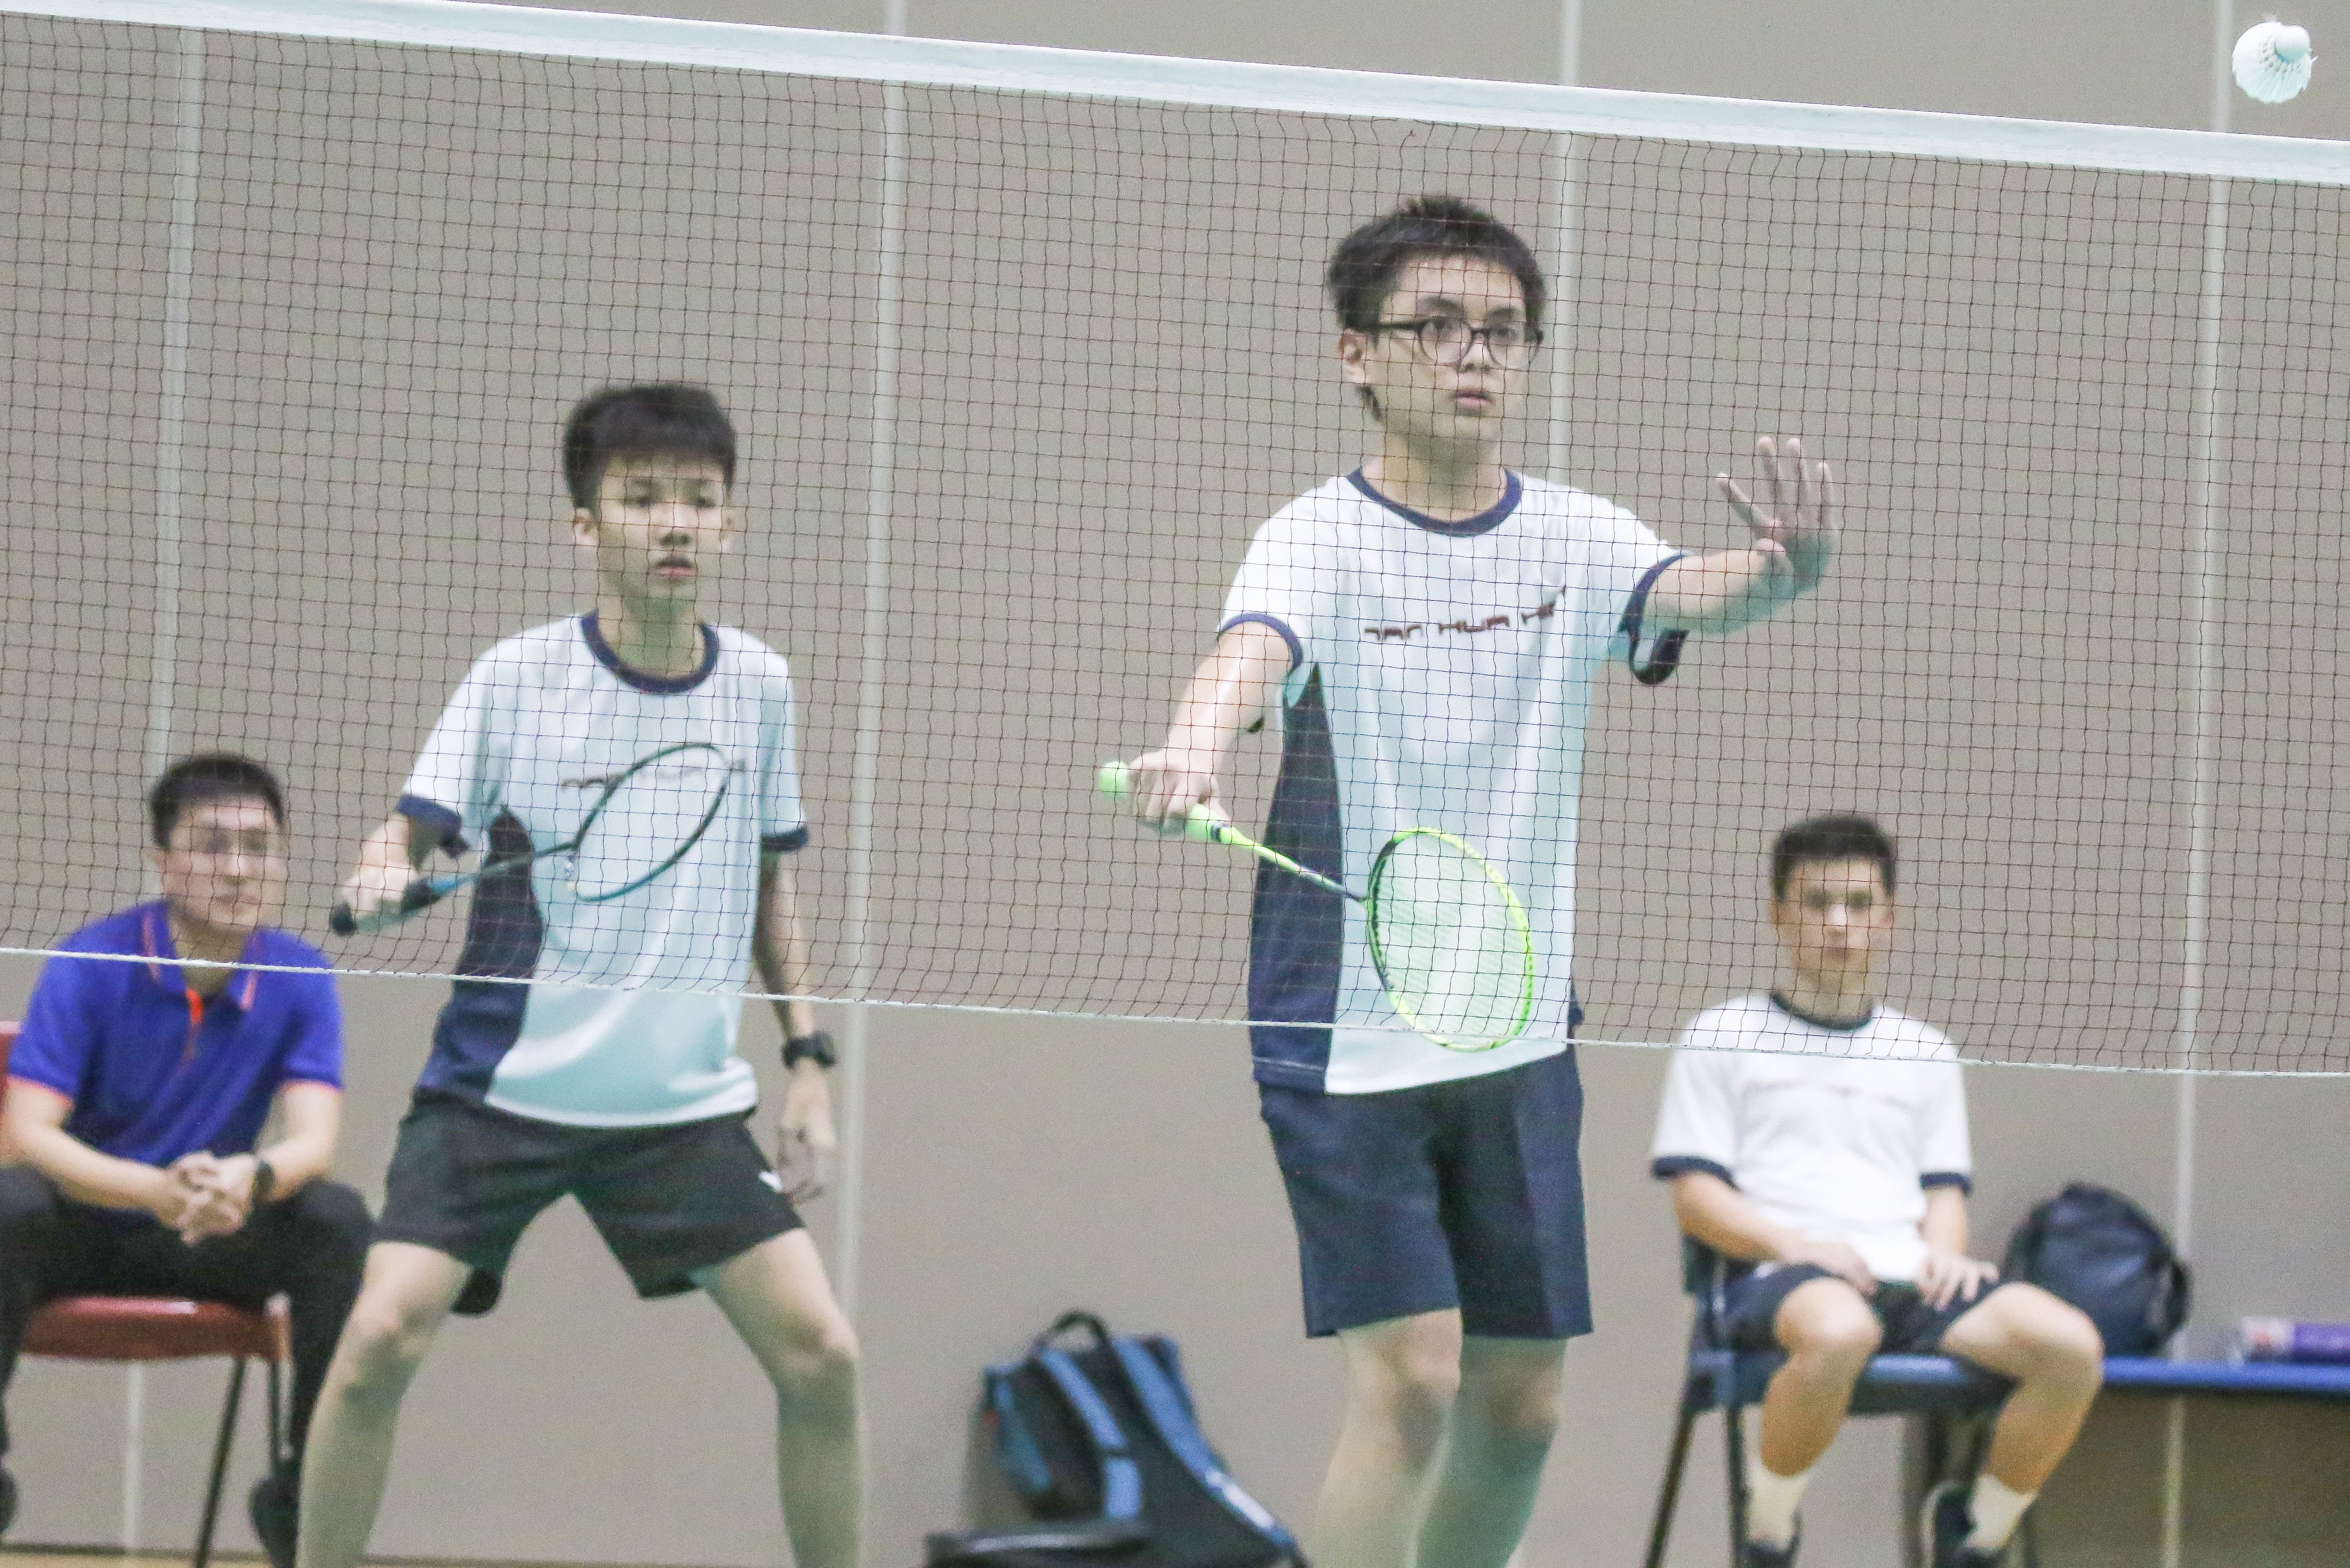 2023-05-17_Badminton_By Chin KK_IFP_1989_edited